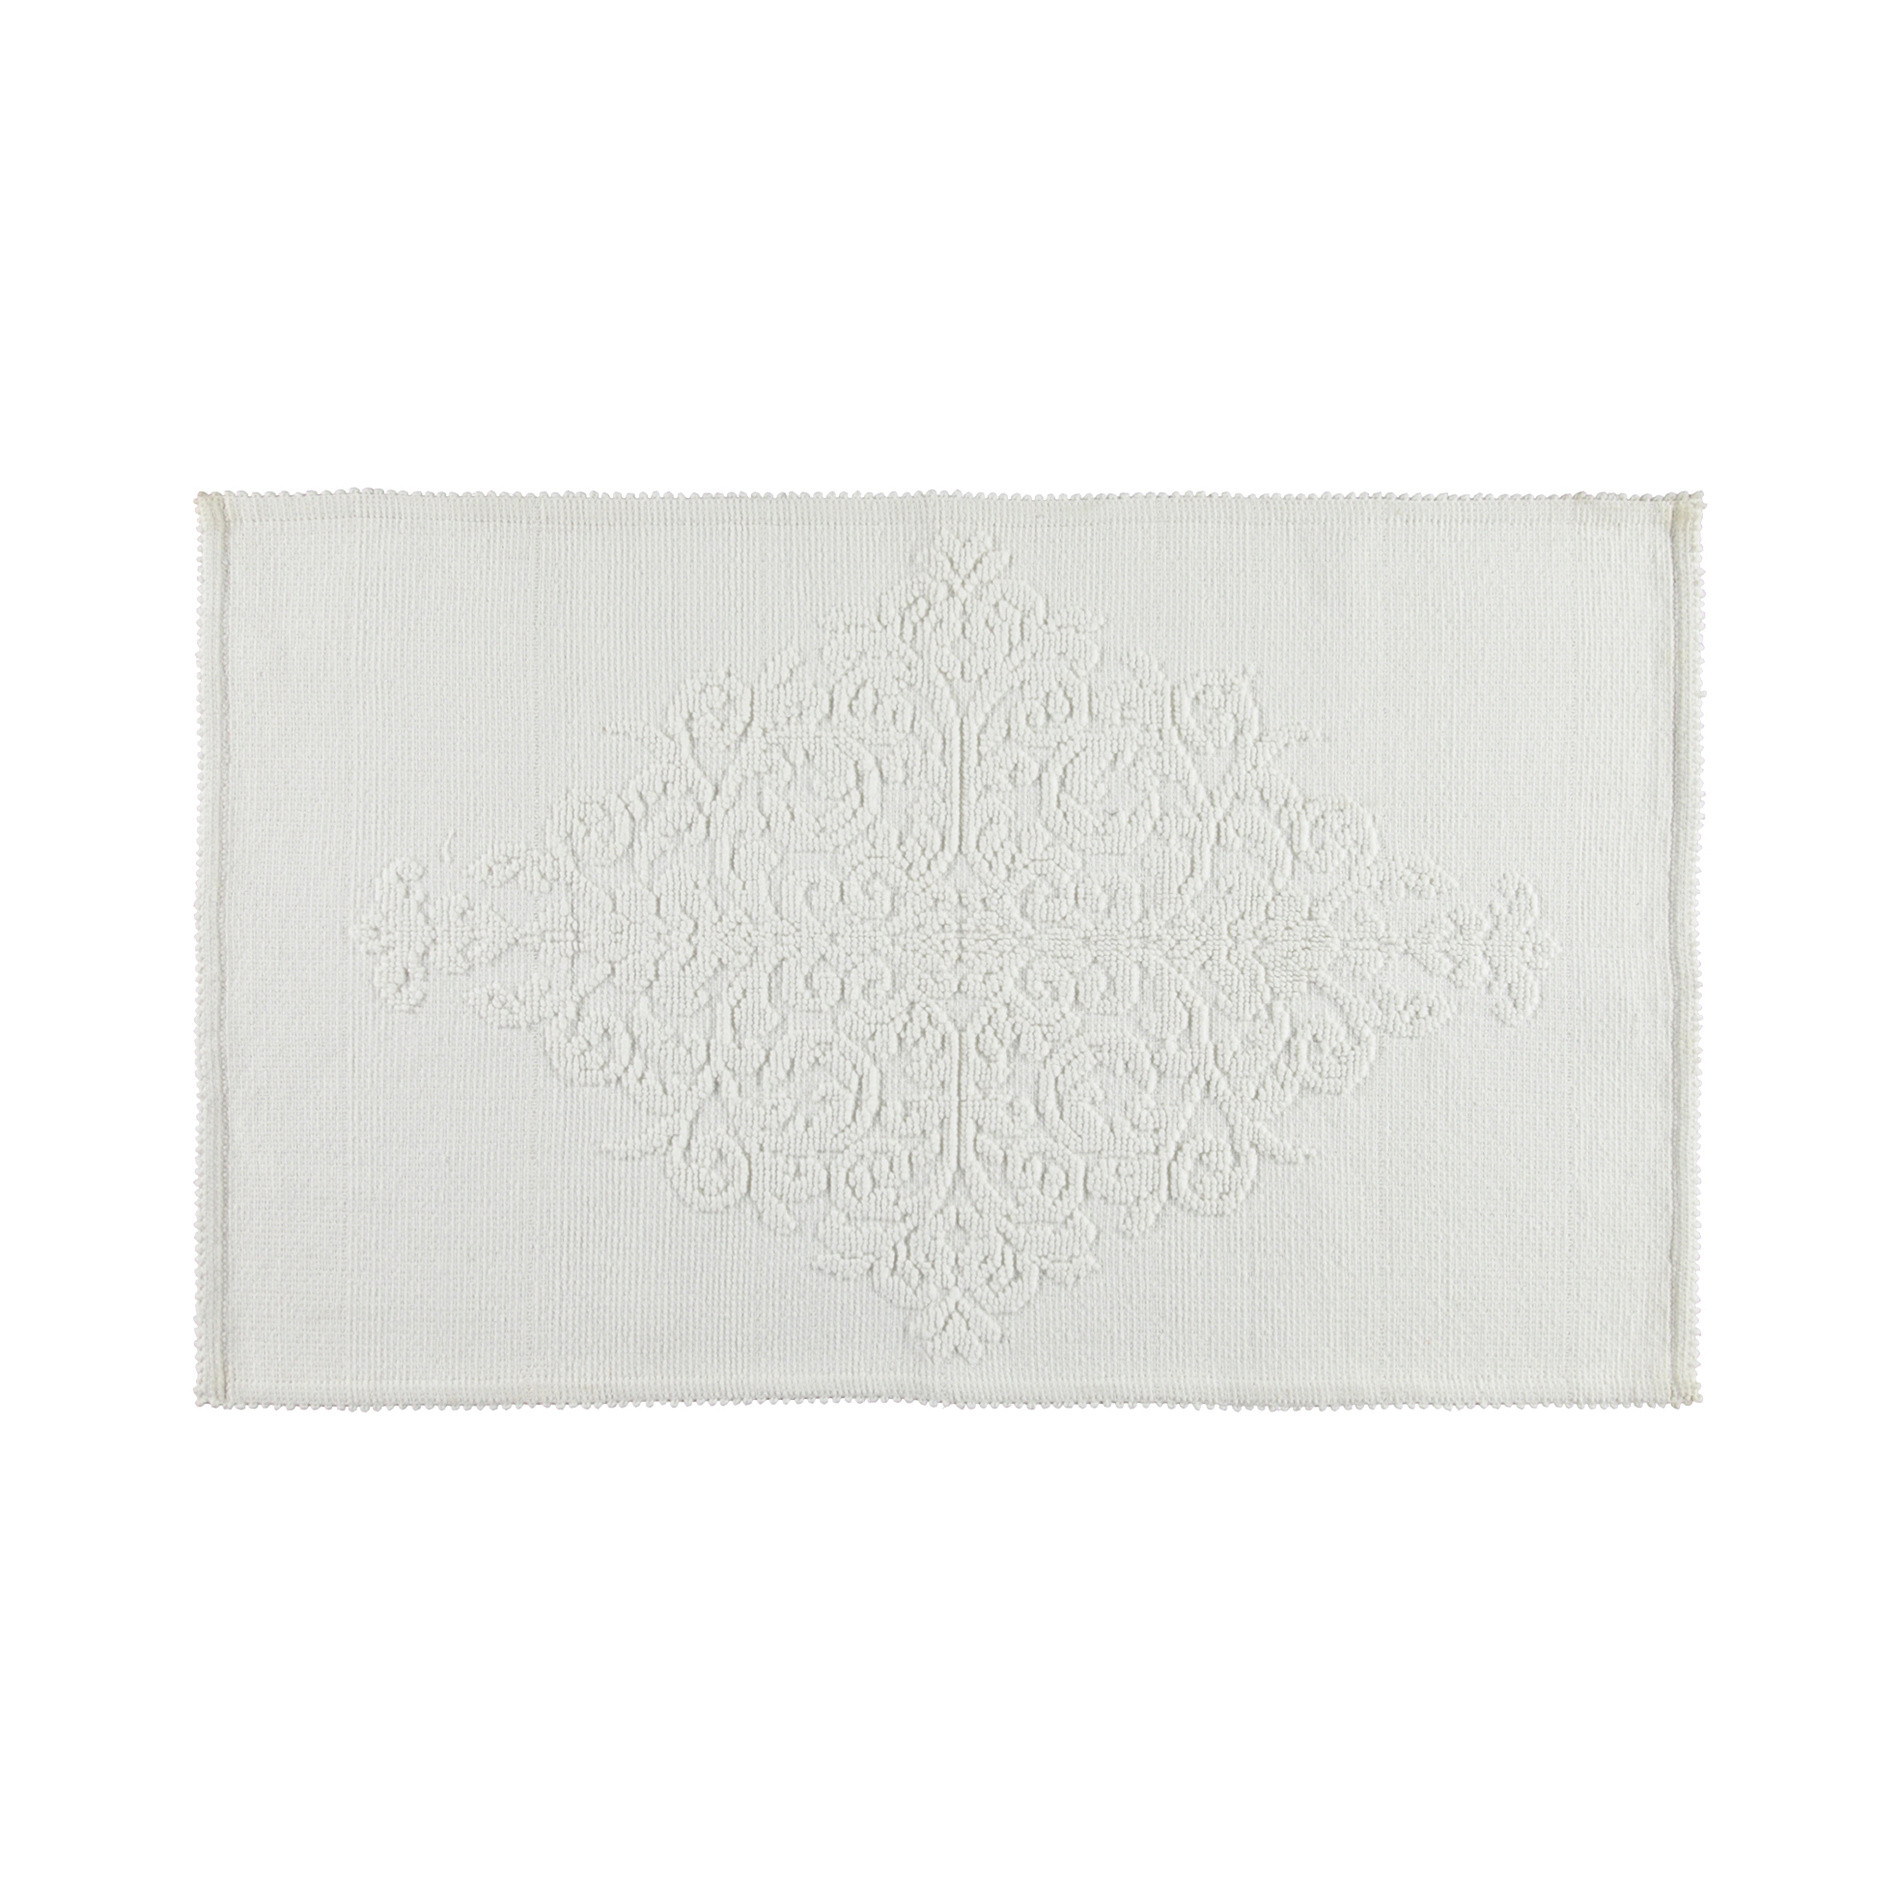 Bath mat with raised decoration, White, large image number 0